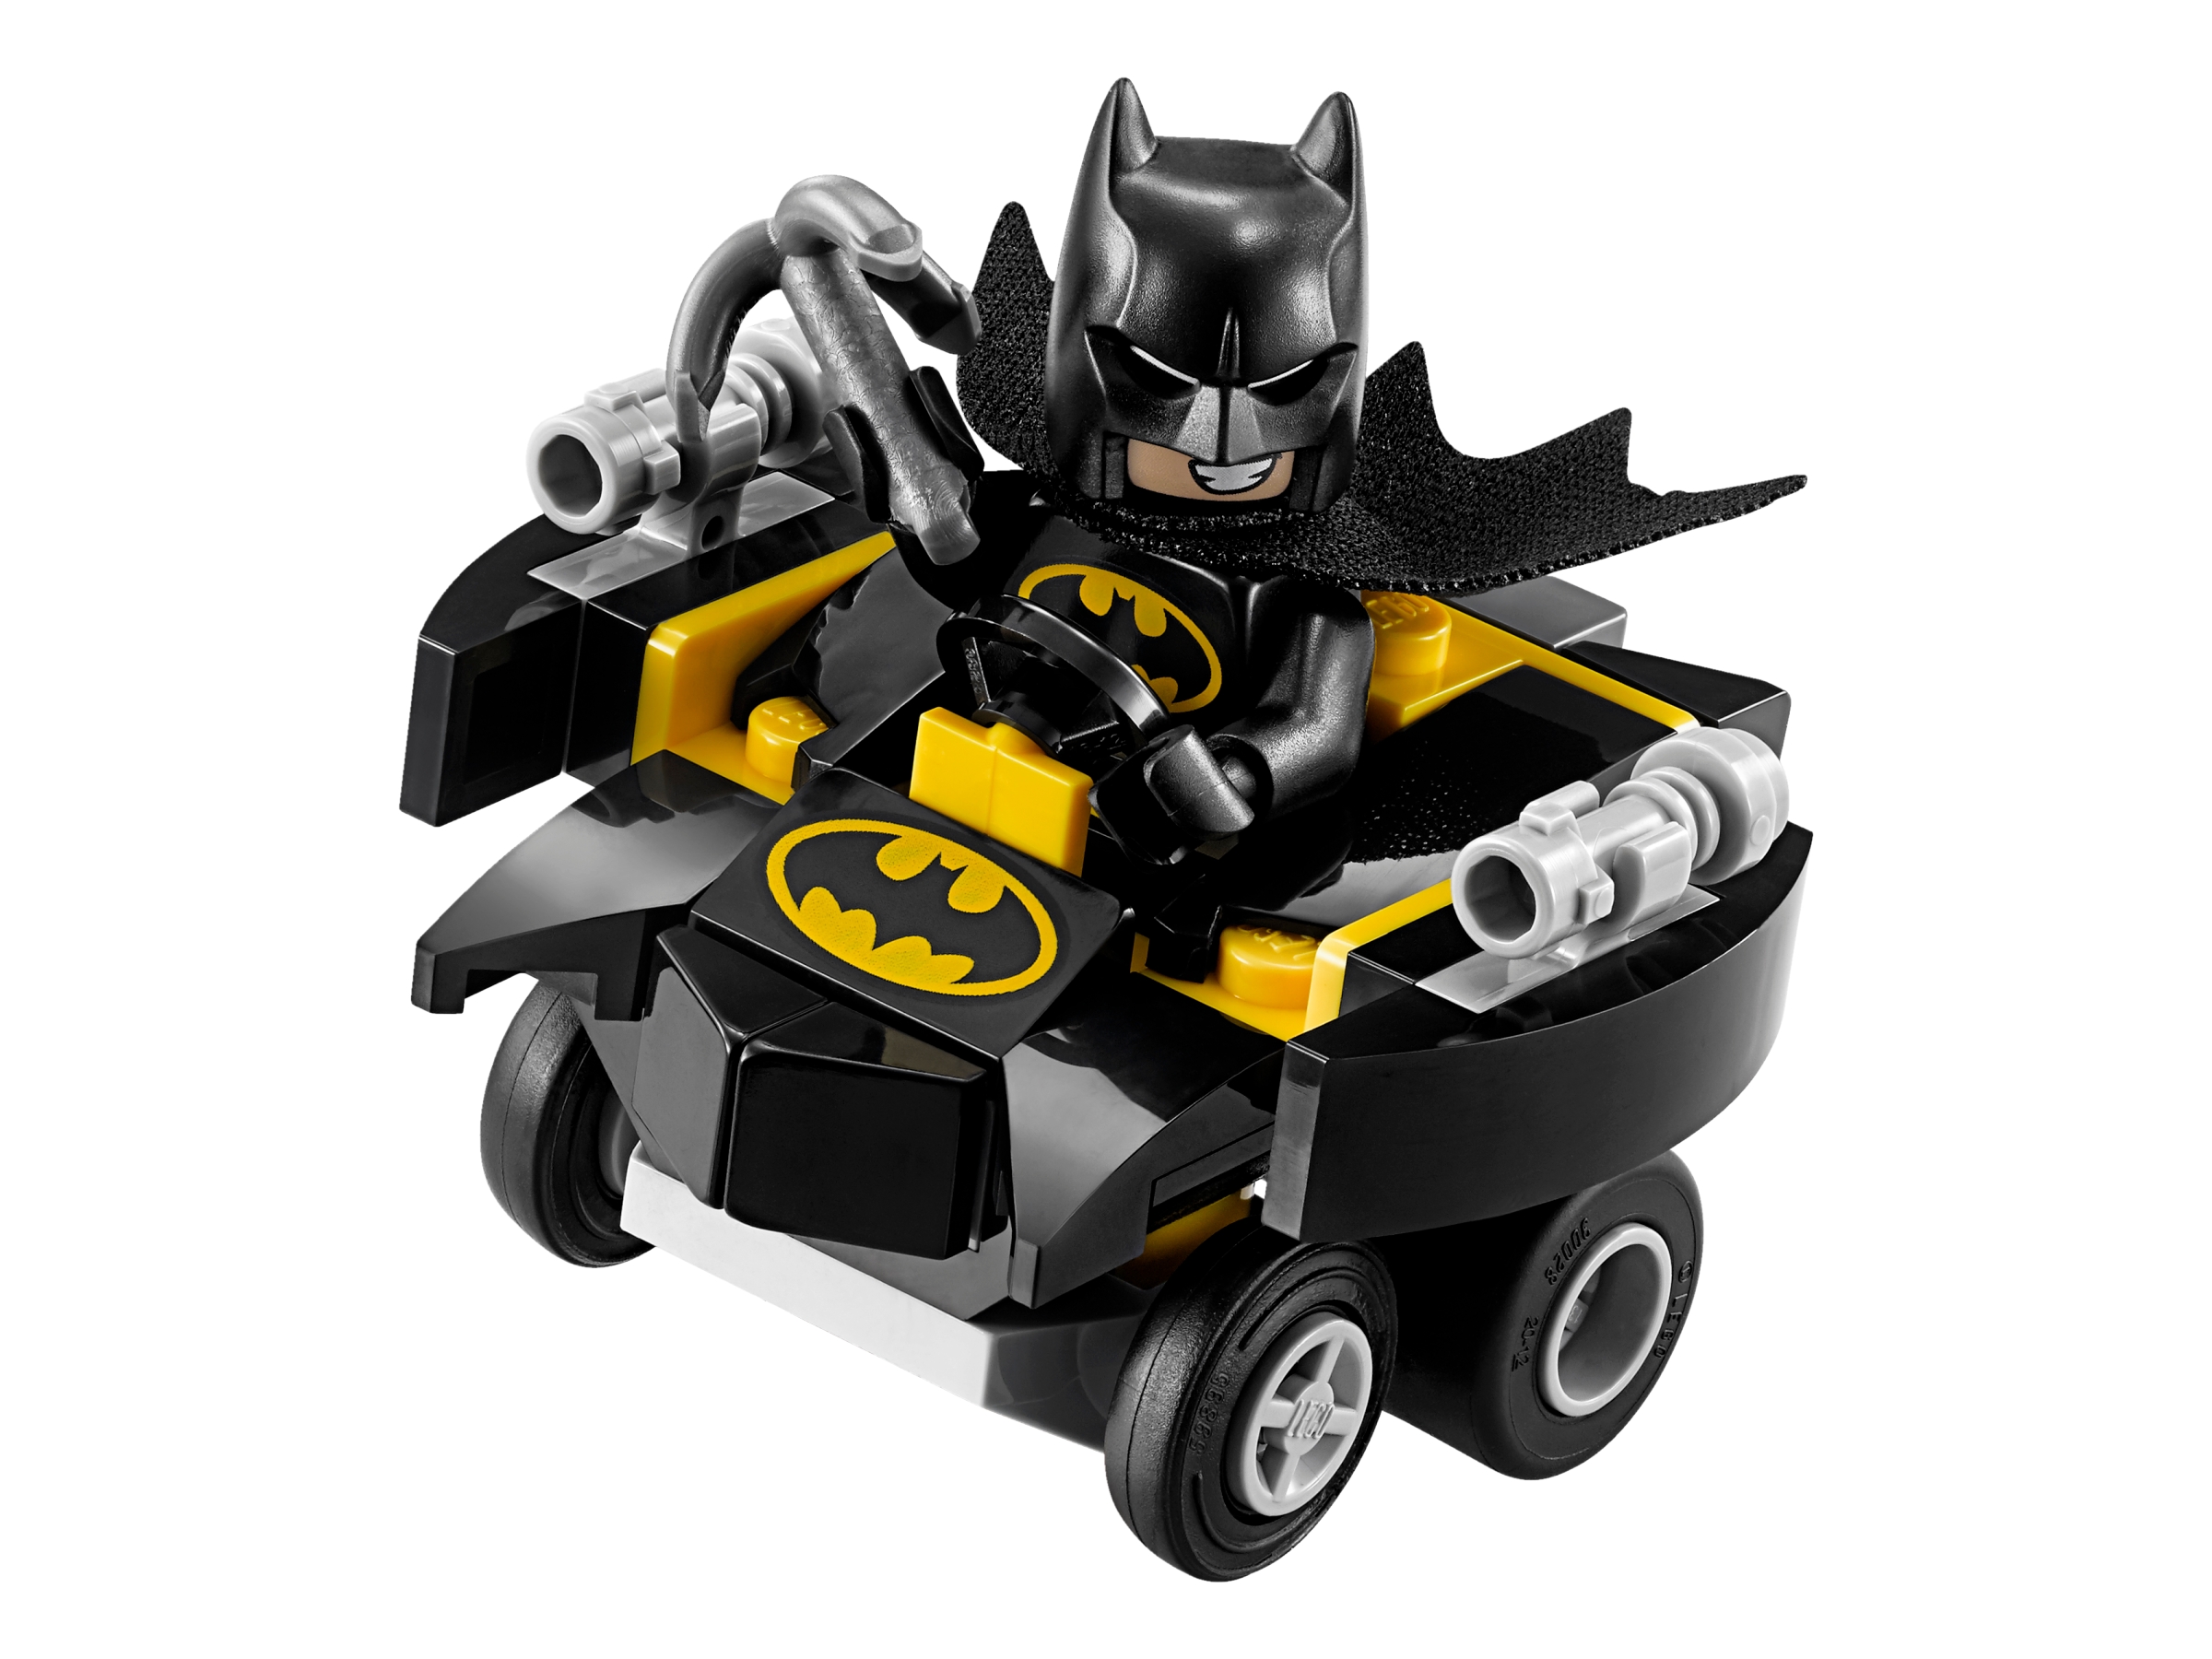 Batman DC Super Heroes Justice League LEGO Minifigures 76087 - The  Minifigure Store - Authorised LEGO Retailer